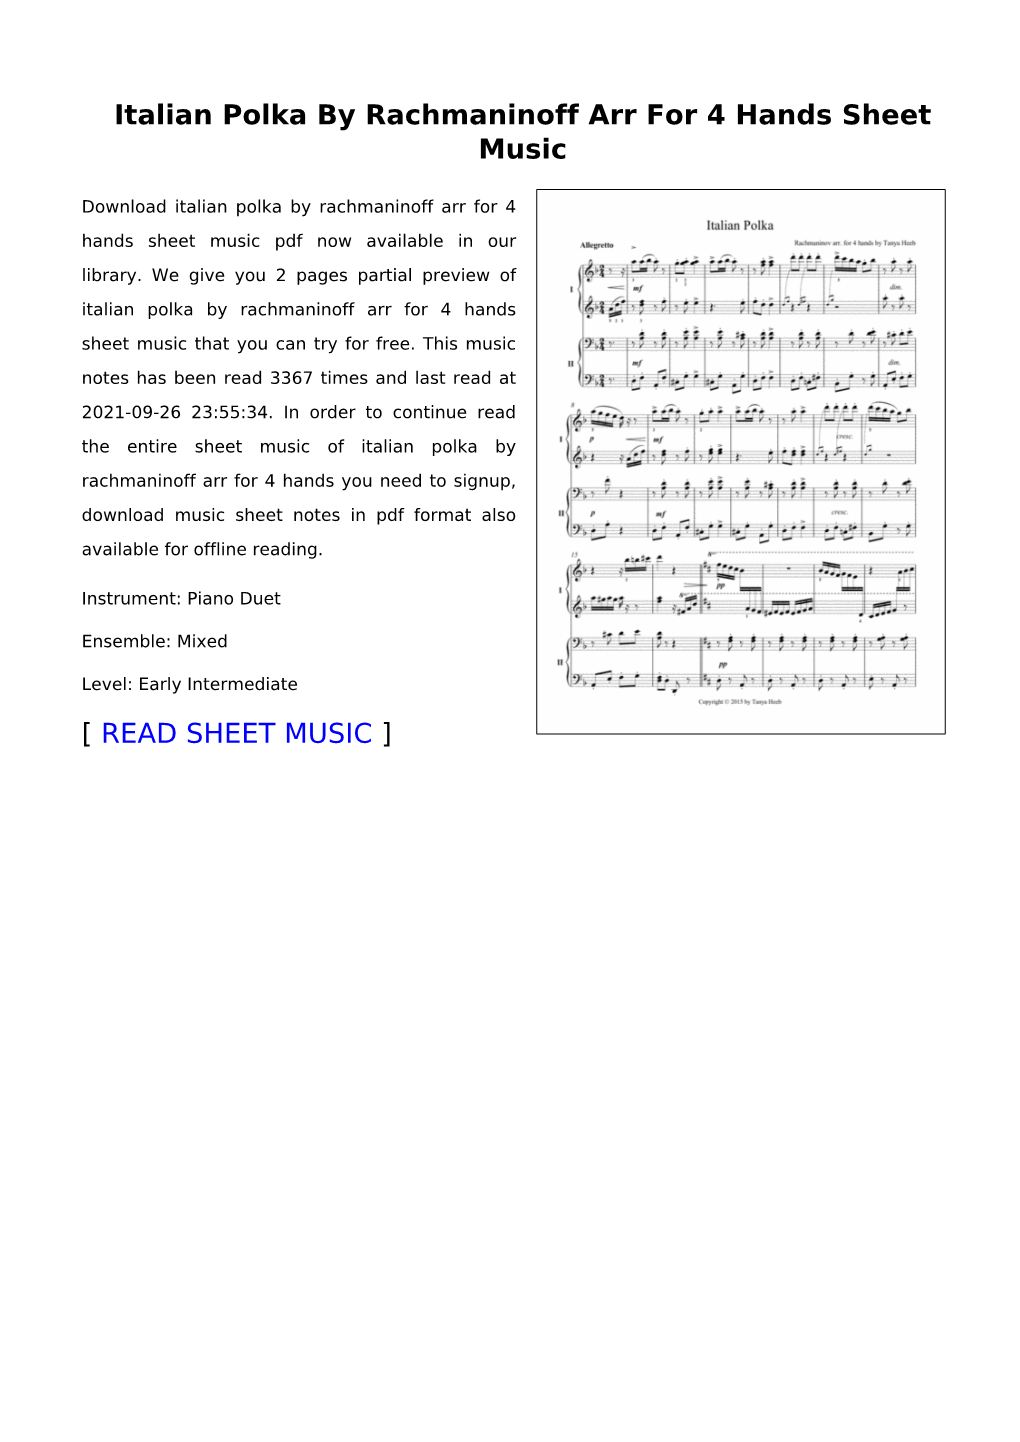 Italian Polka by Rachmaninoff Arr for 4 Hands Sheet Music